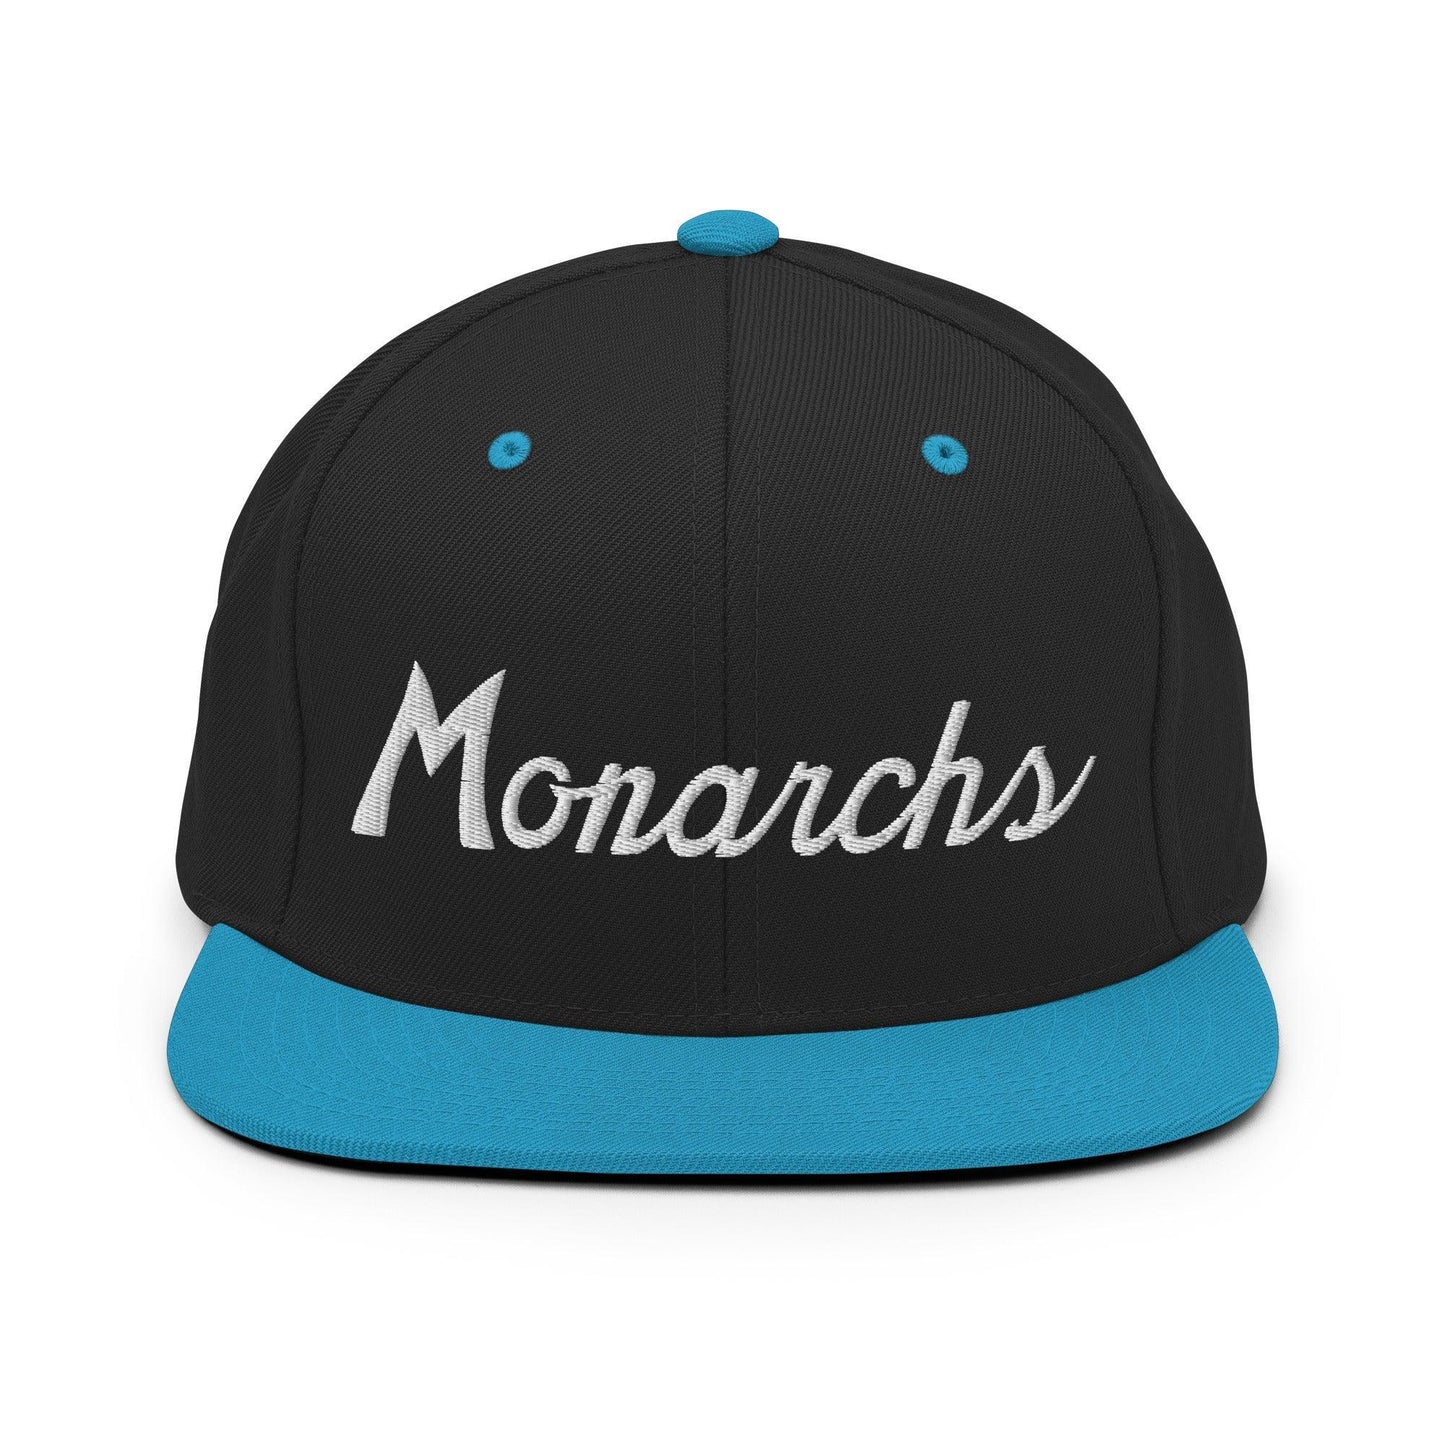 Monarchs School Mascot Script Snapback Hat Black/ Teal